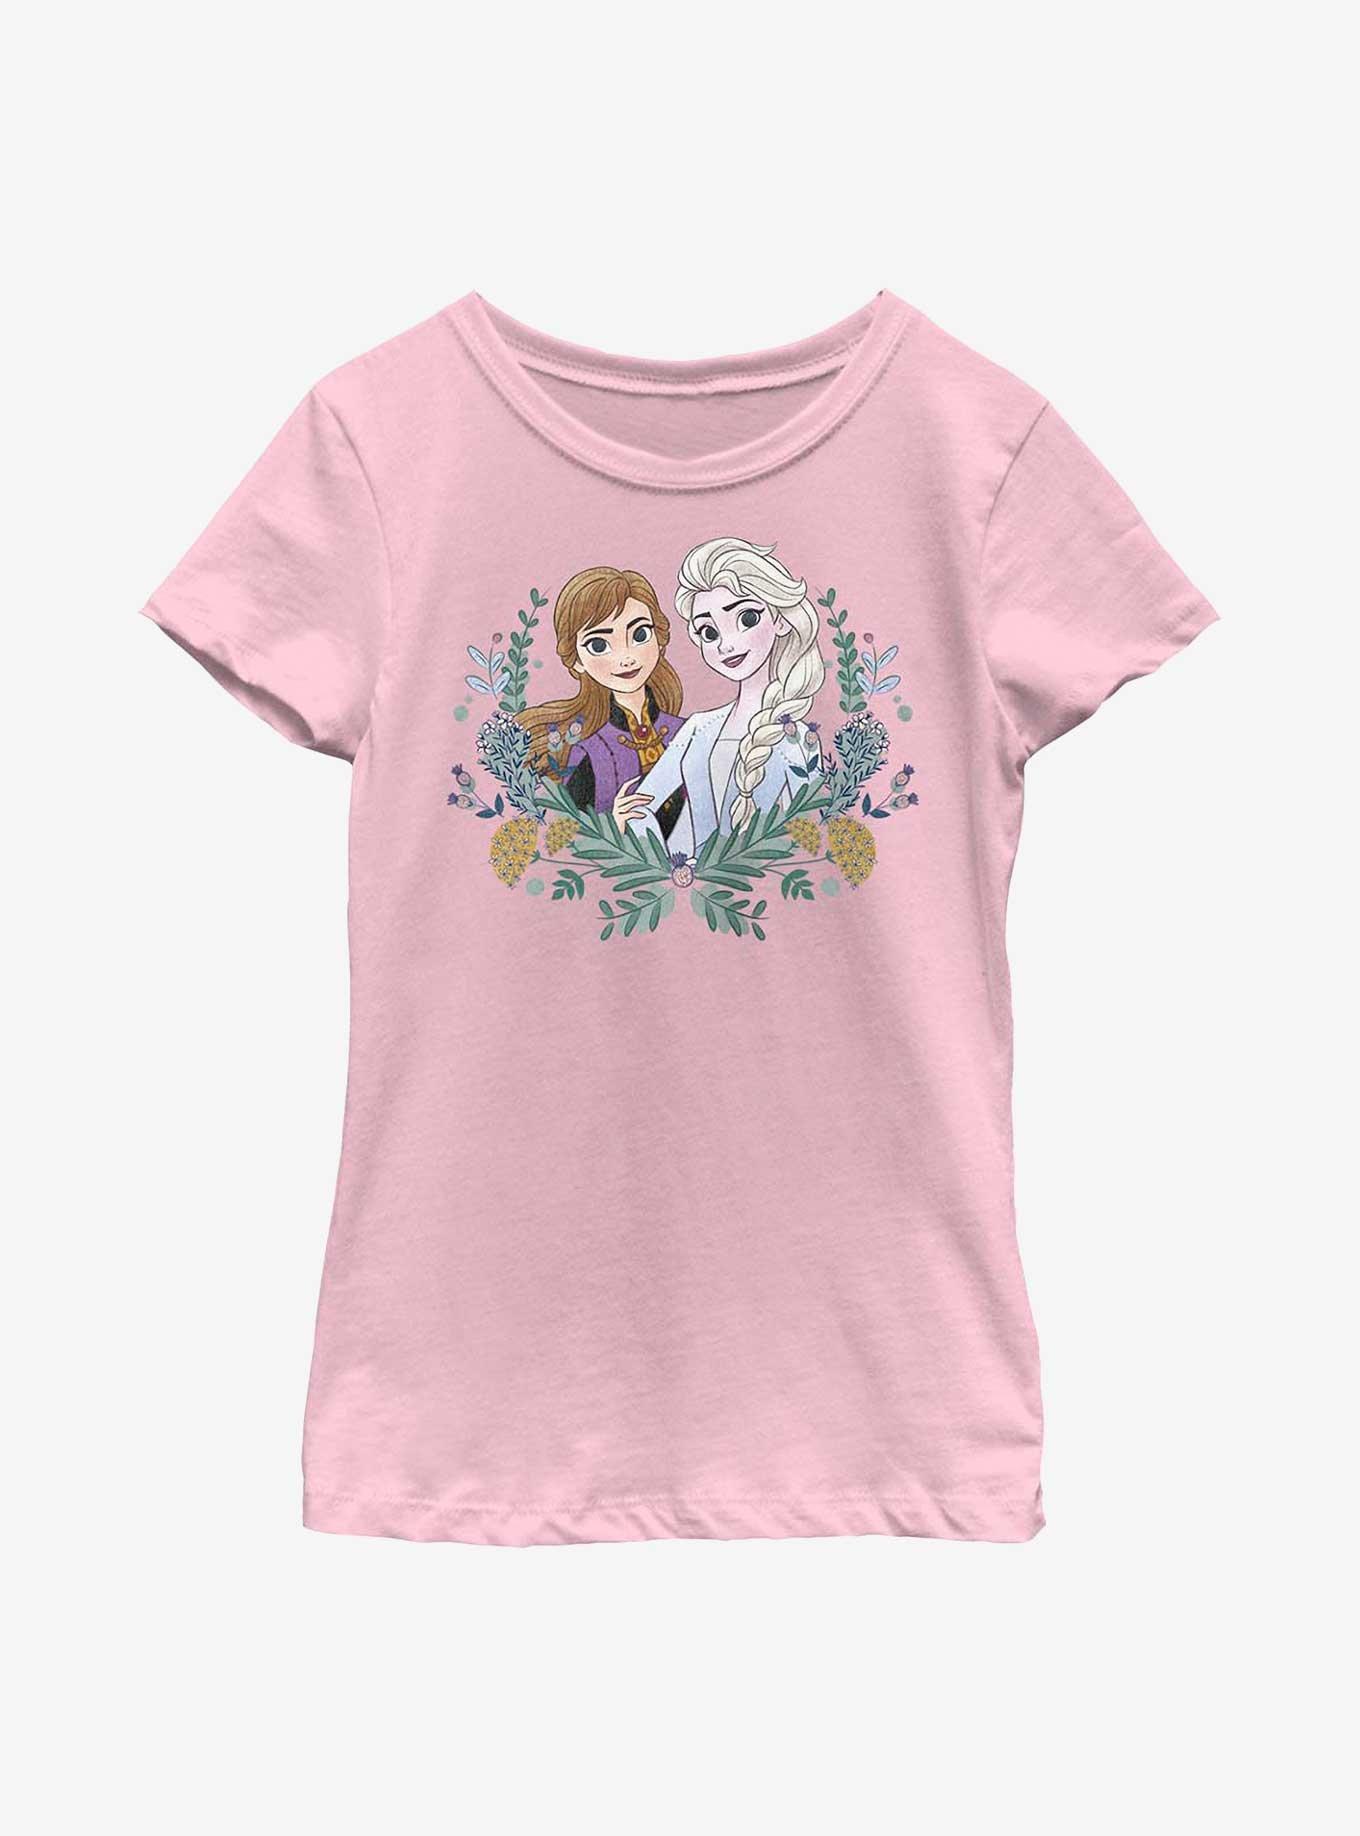 Disney Frozen 2 Anna And Elsa Wreath Youth Girls T-Shirt, PINK, hi-res